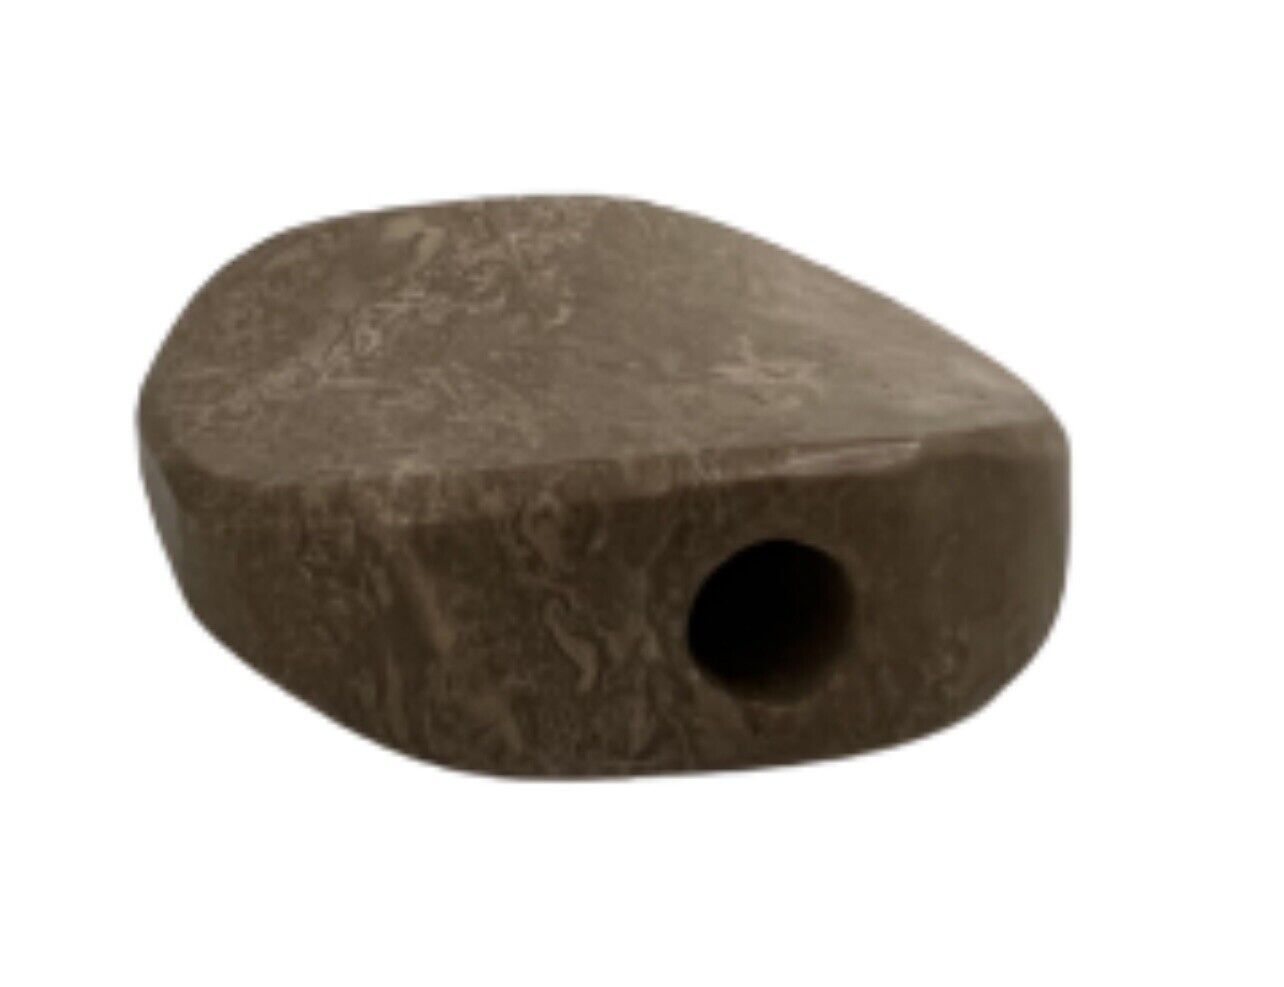 Stone Onyx Smoking 2 inch Tobacco Pipe